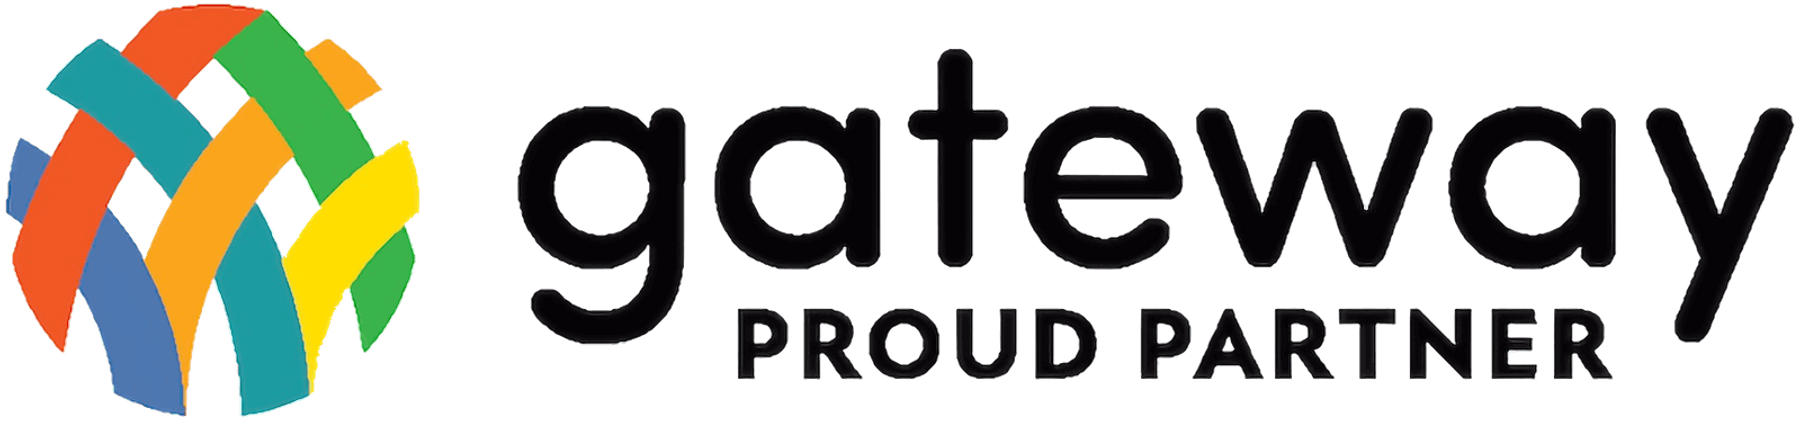 Gateway Proud Partner logo on a transparent background